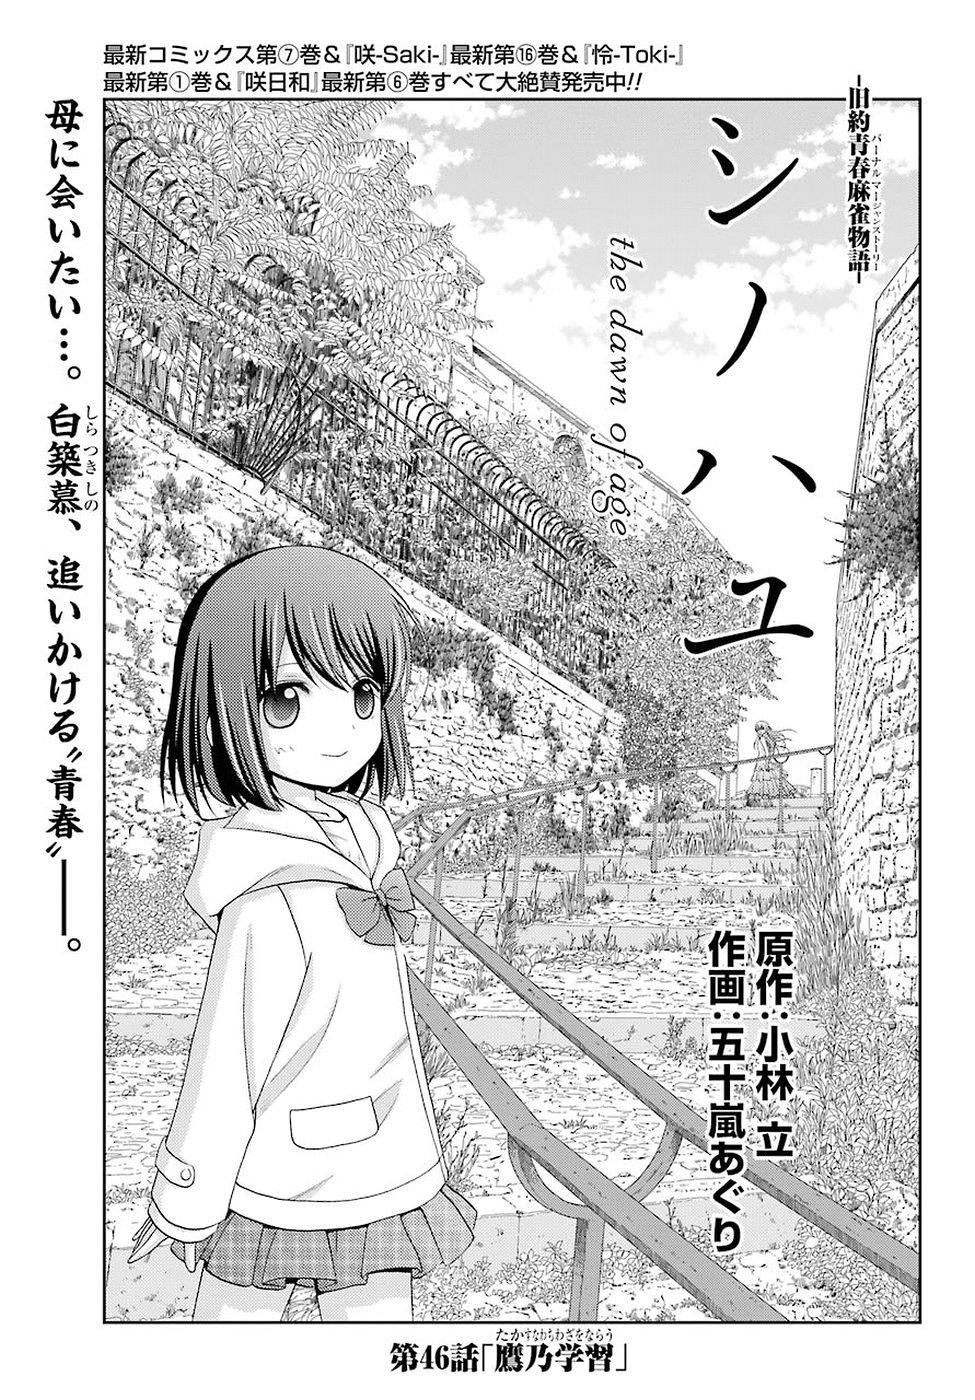 Shinohayu - The Dawn of Age Manga - Chapter 046 - Page 1